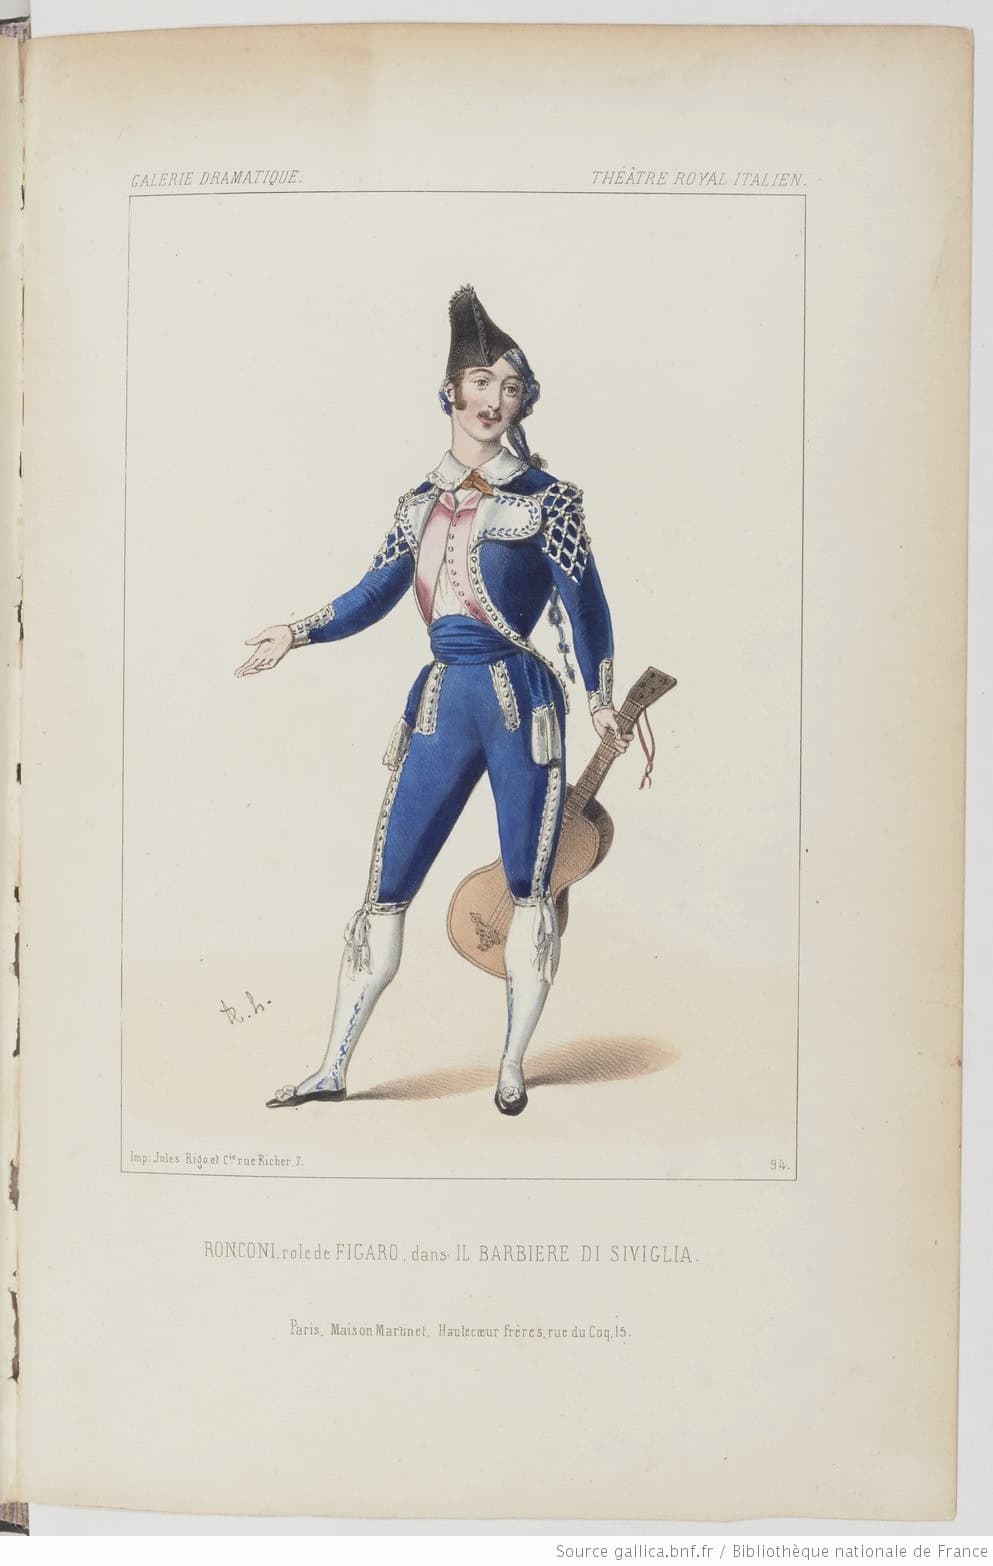 Alexandre Lacauchie: Ronconi in the role of Figaro, 1844 (Gallica ark:/12148/btv1b10541097g)